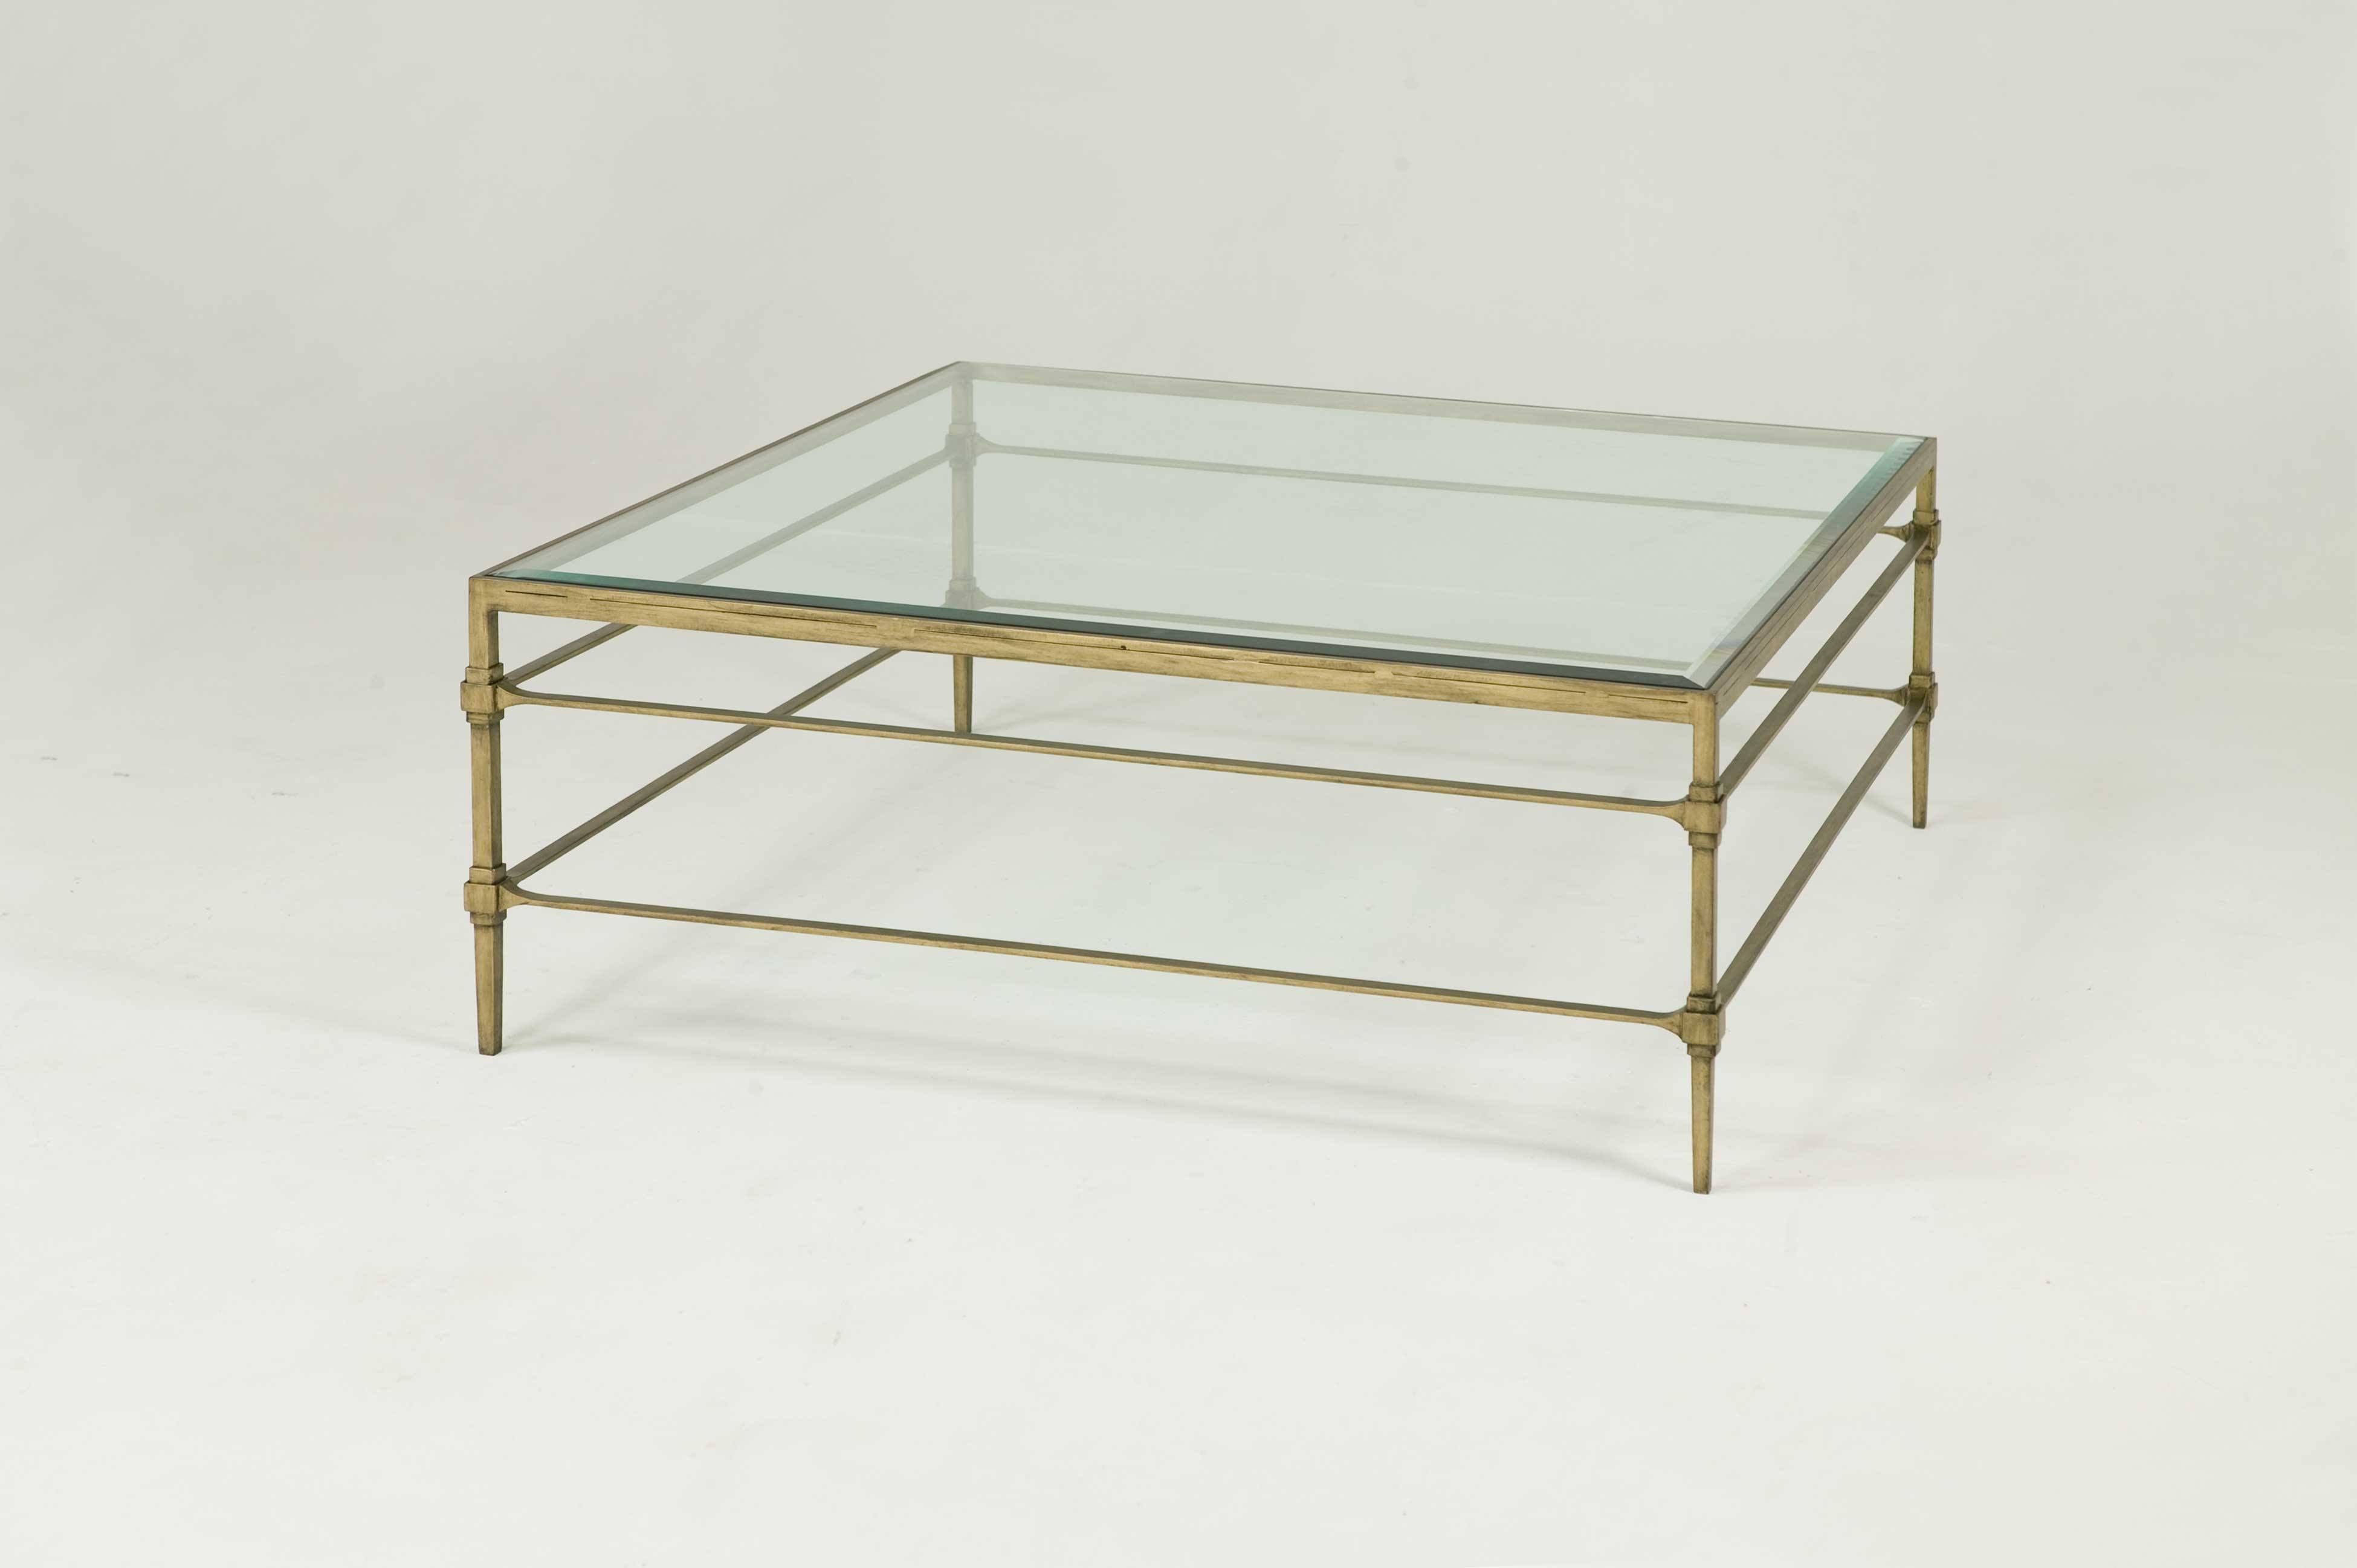 Coffee Table: Astounding Rectangular Glass Coffee Table With Shelf Within Glass Coffee Tables (View 15 of 24)